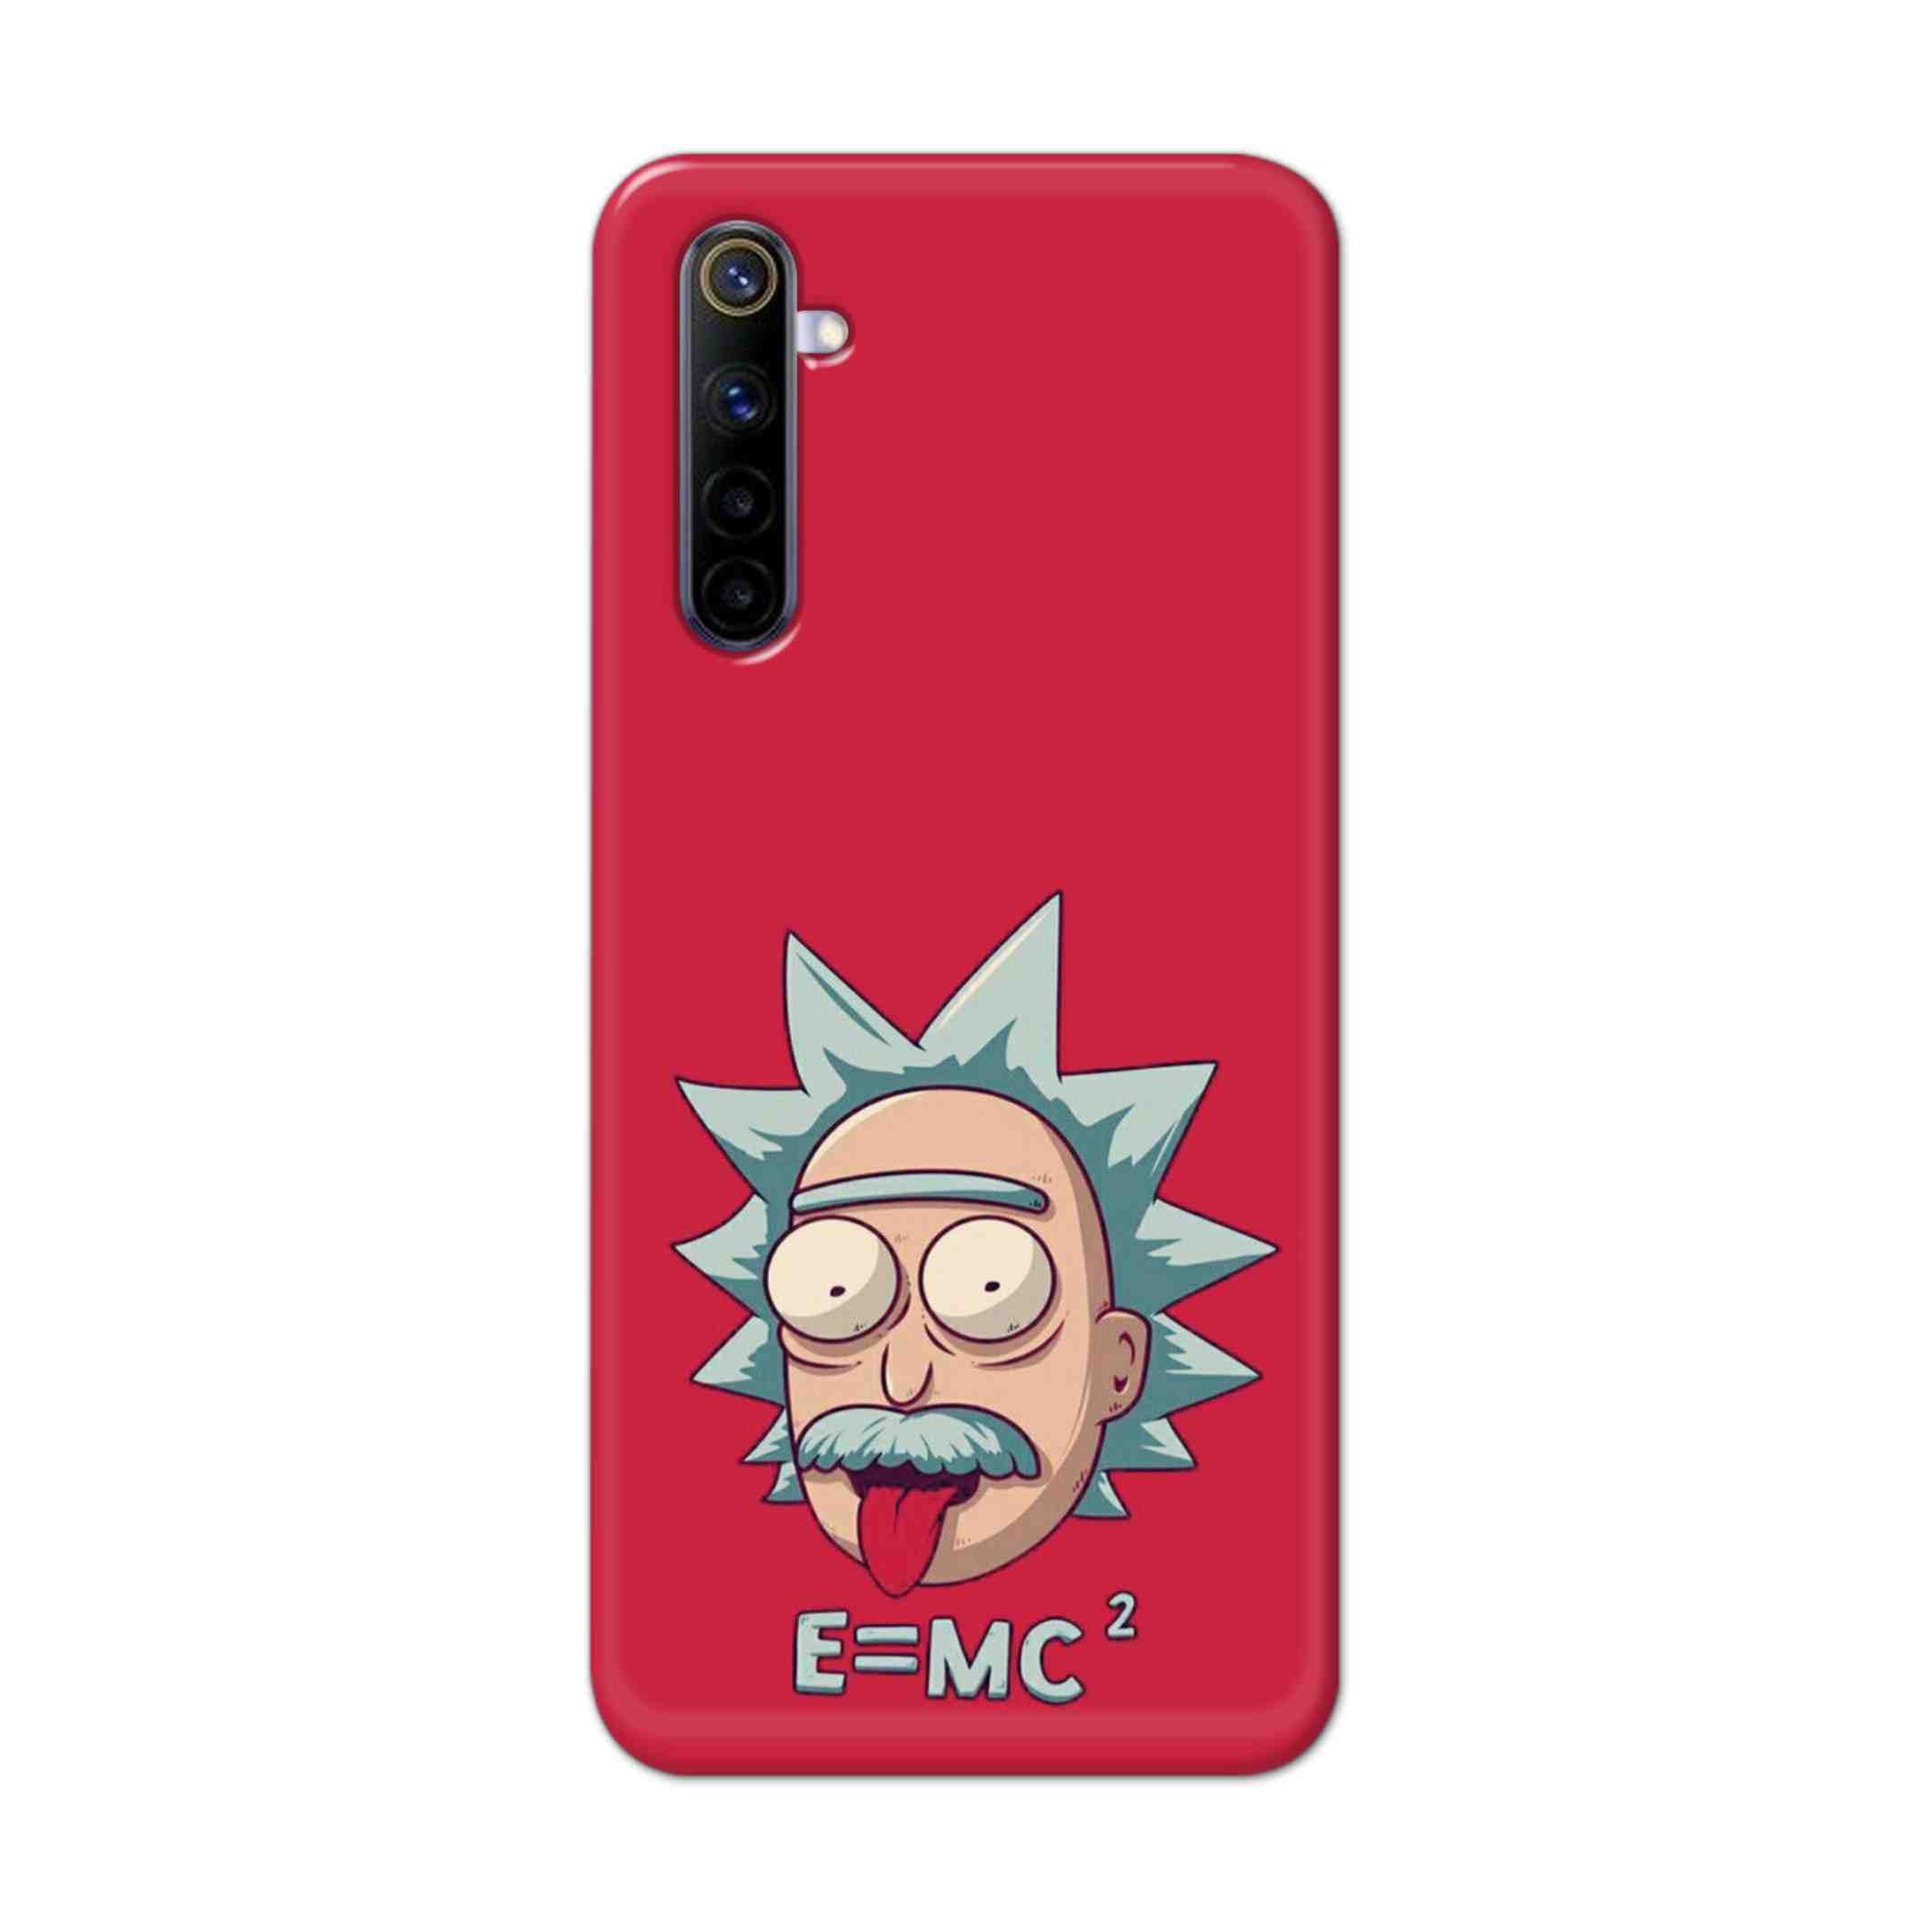 Buy E=Mc Hard Back Mobile Phone Case Cover For REALME 6 Online